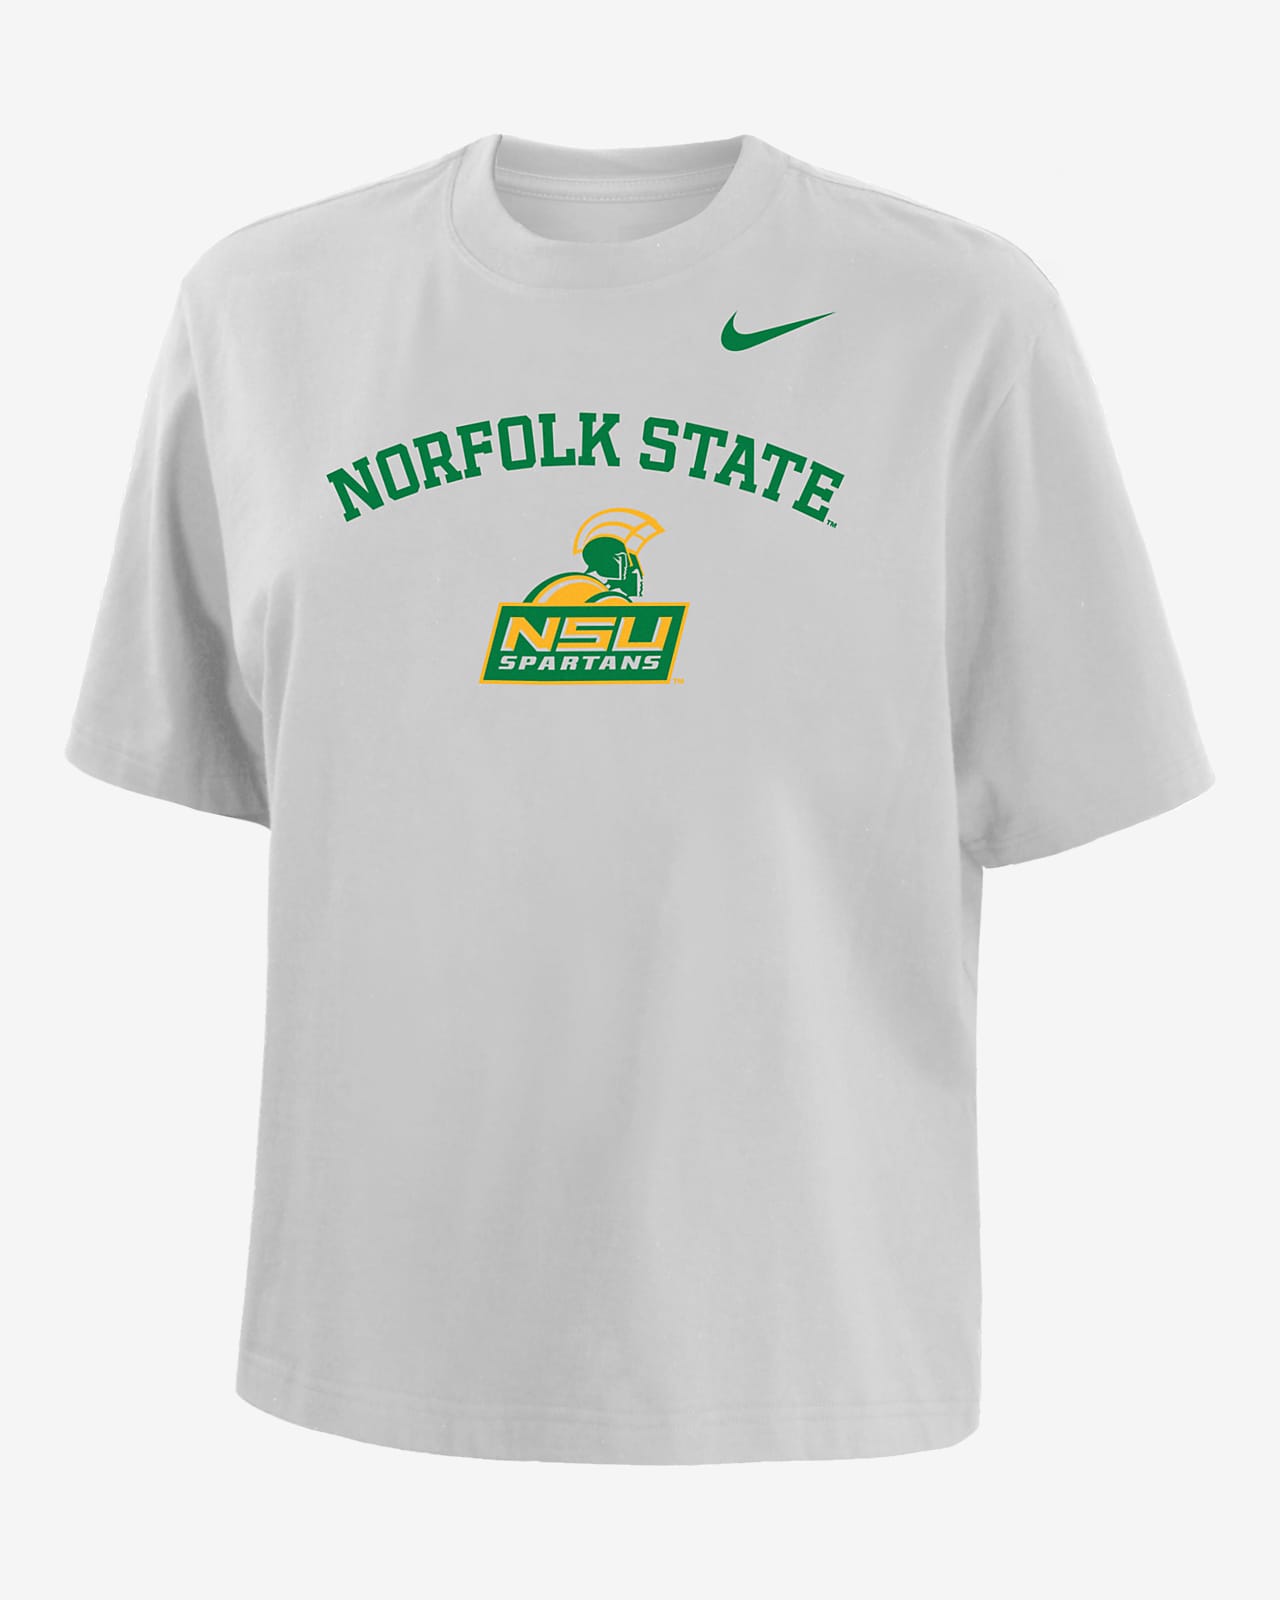 Nike College (Norfolk State) Women's Boxy T-Shirt